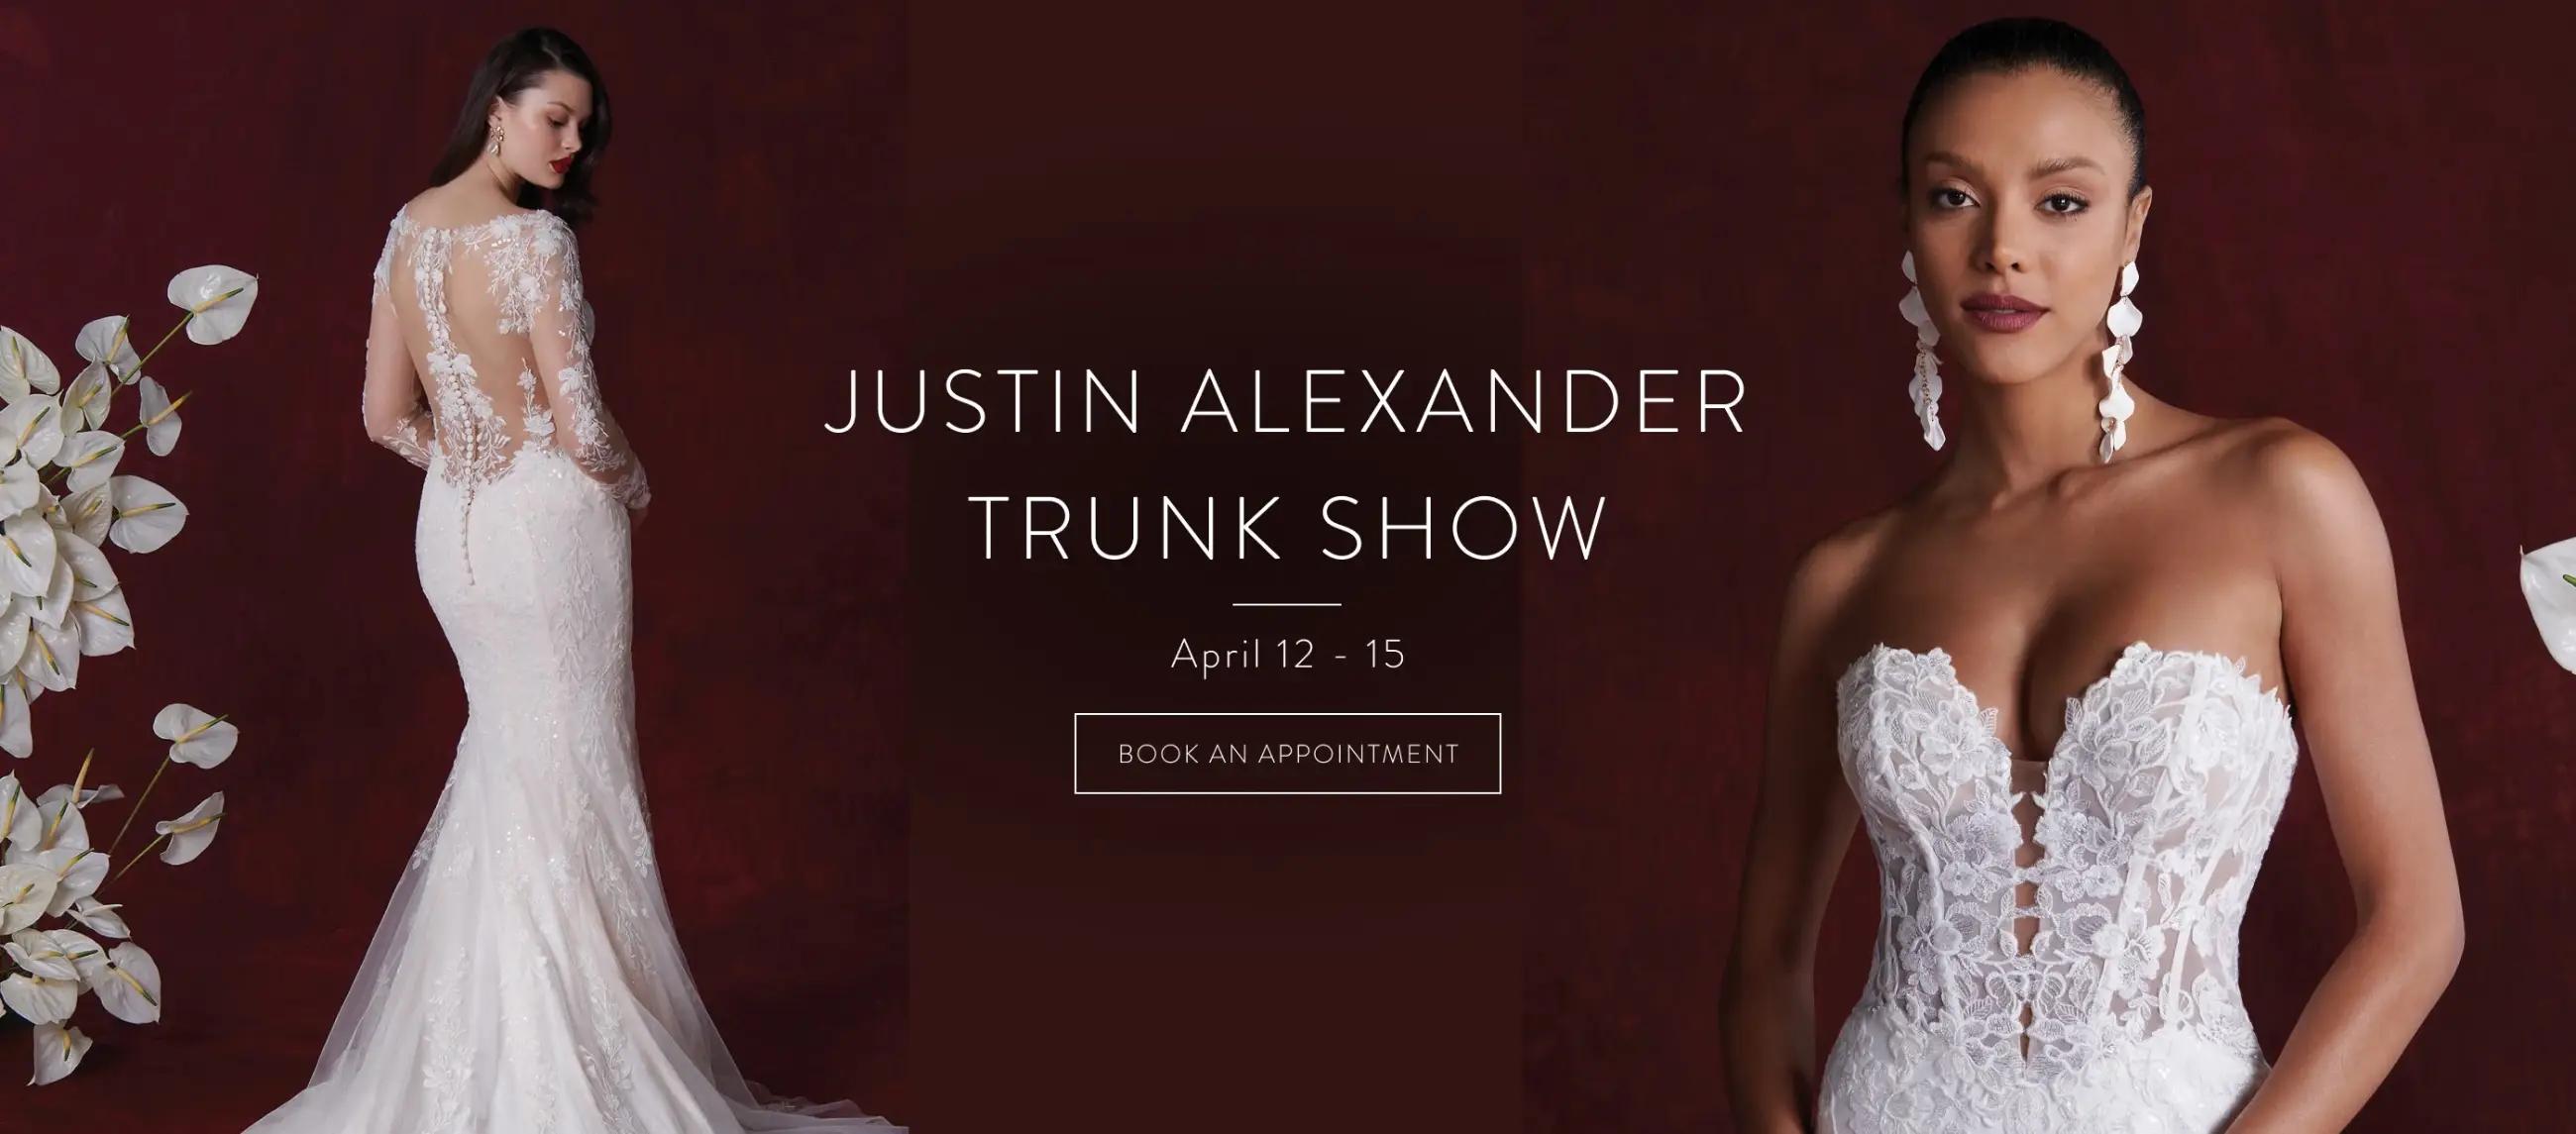 Justin Alexander Trunk Show banner desktop